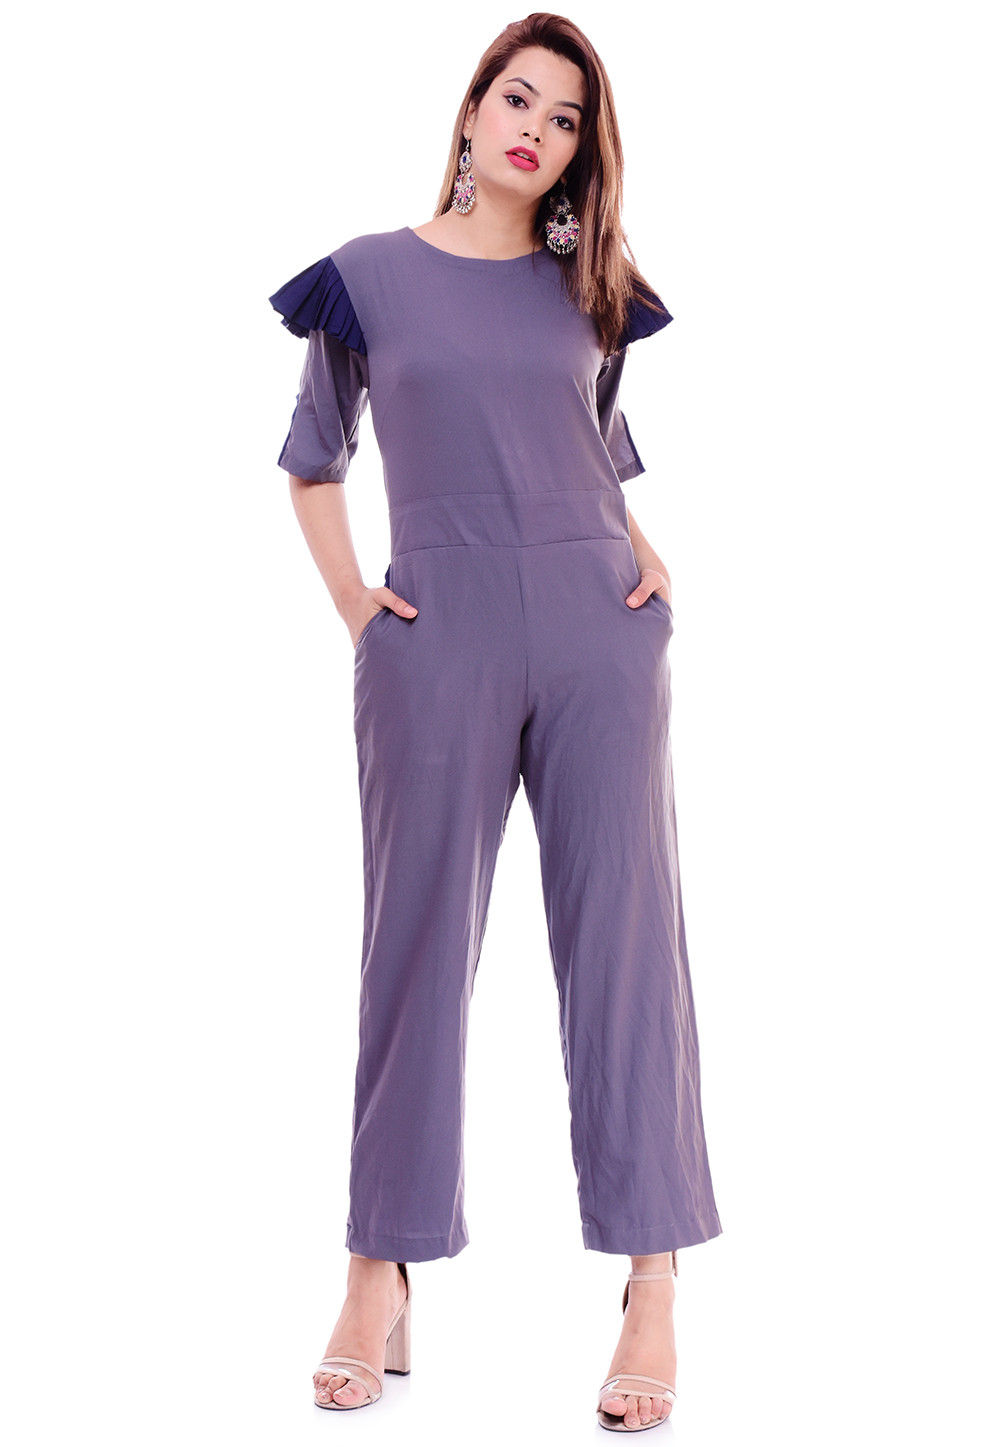 Solid Color Crepe Jumpsuit in Light Purple : TJW1094